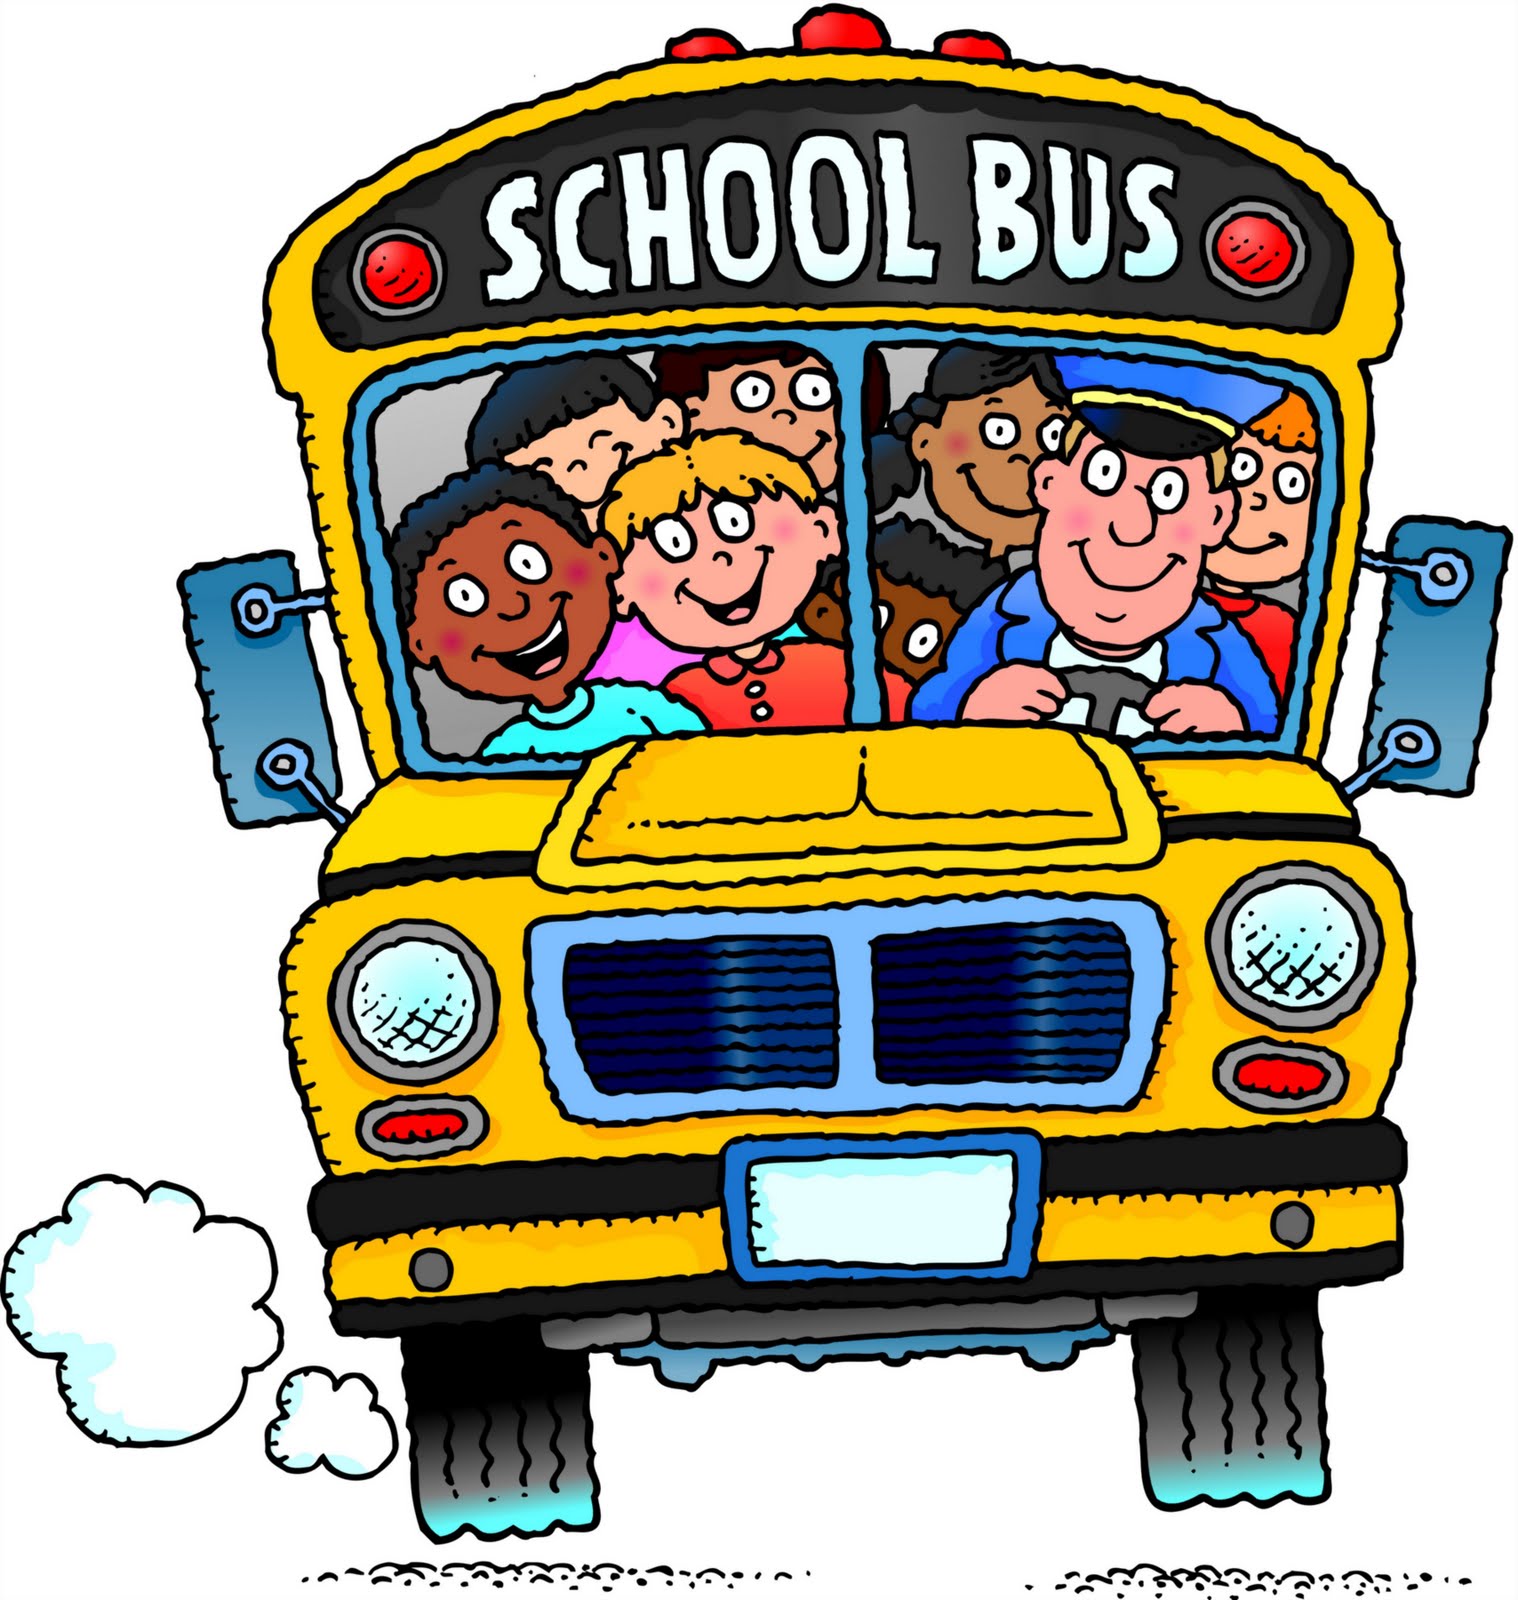 Cartoon School Bus Cartoon School Bus With Kids School Bus Cartoon